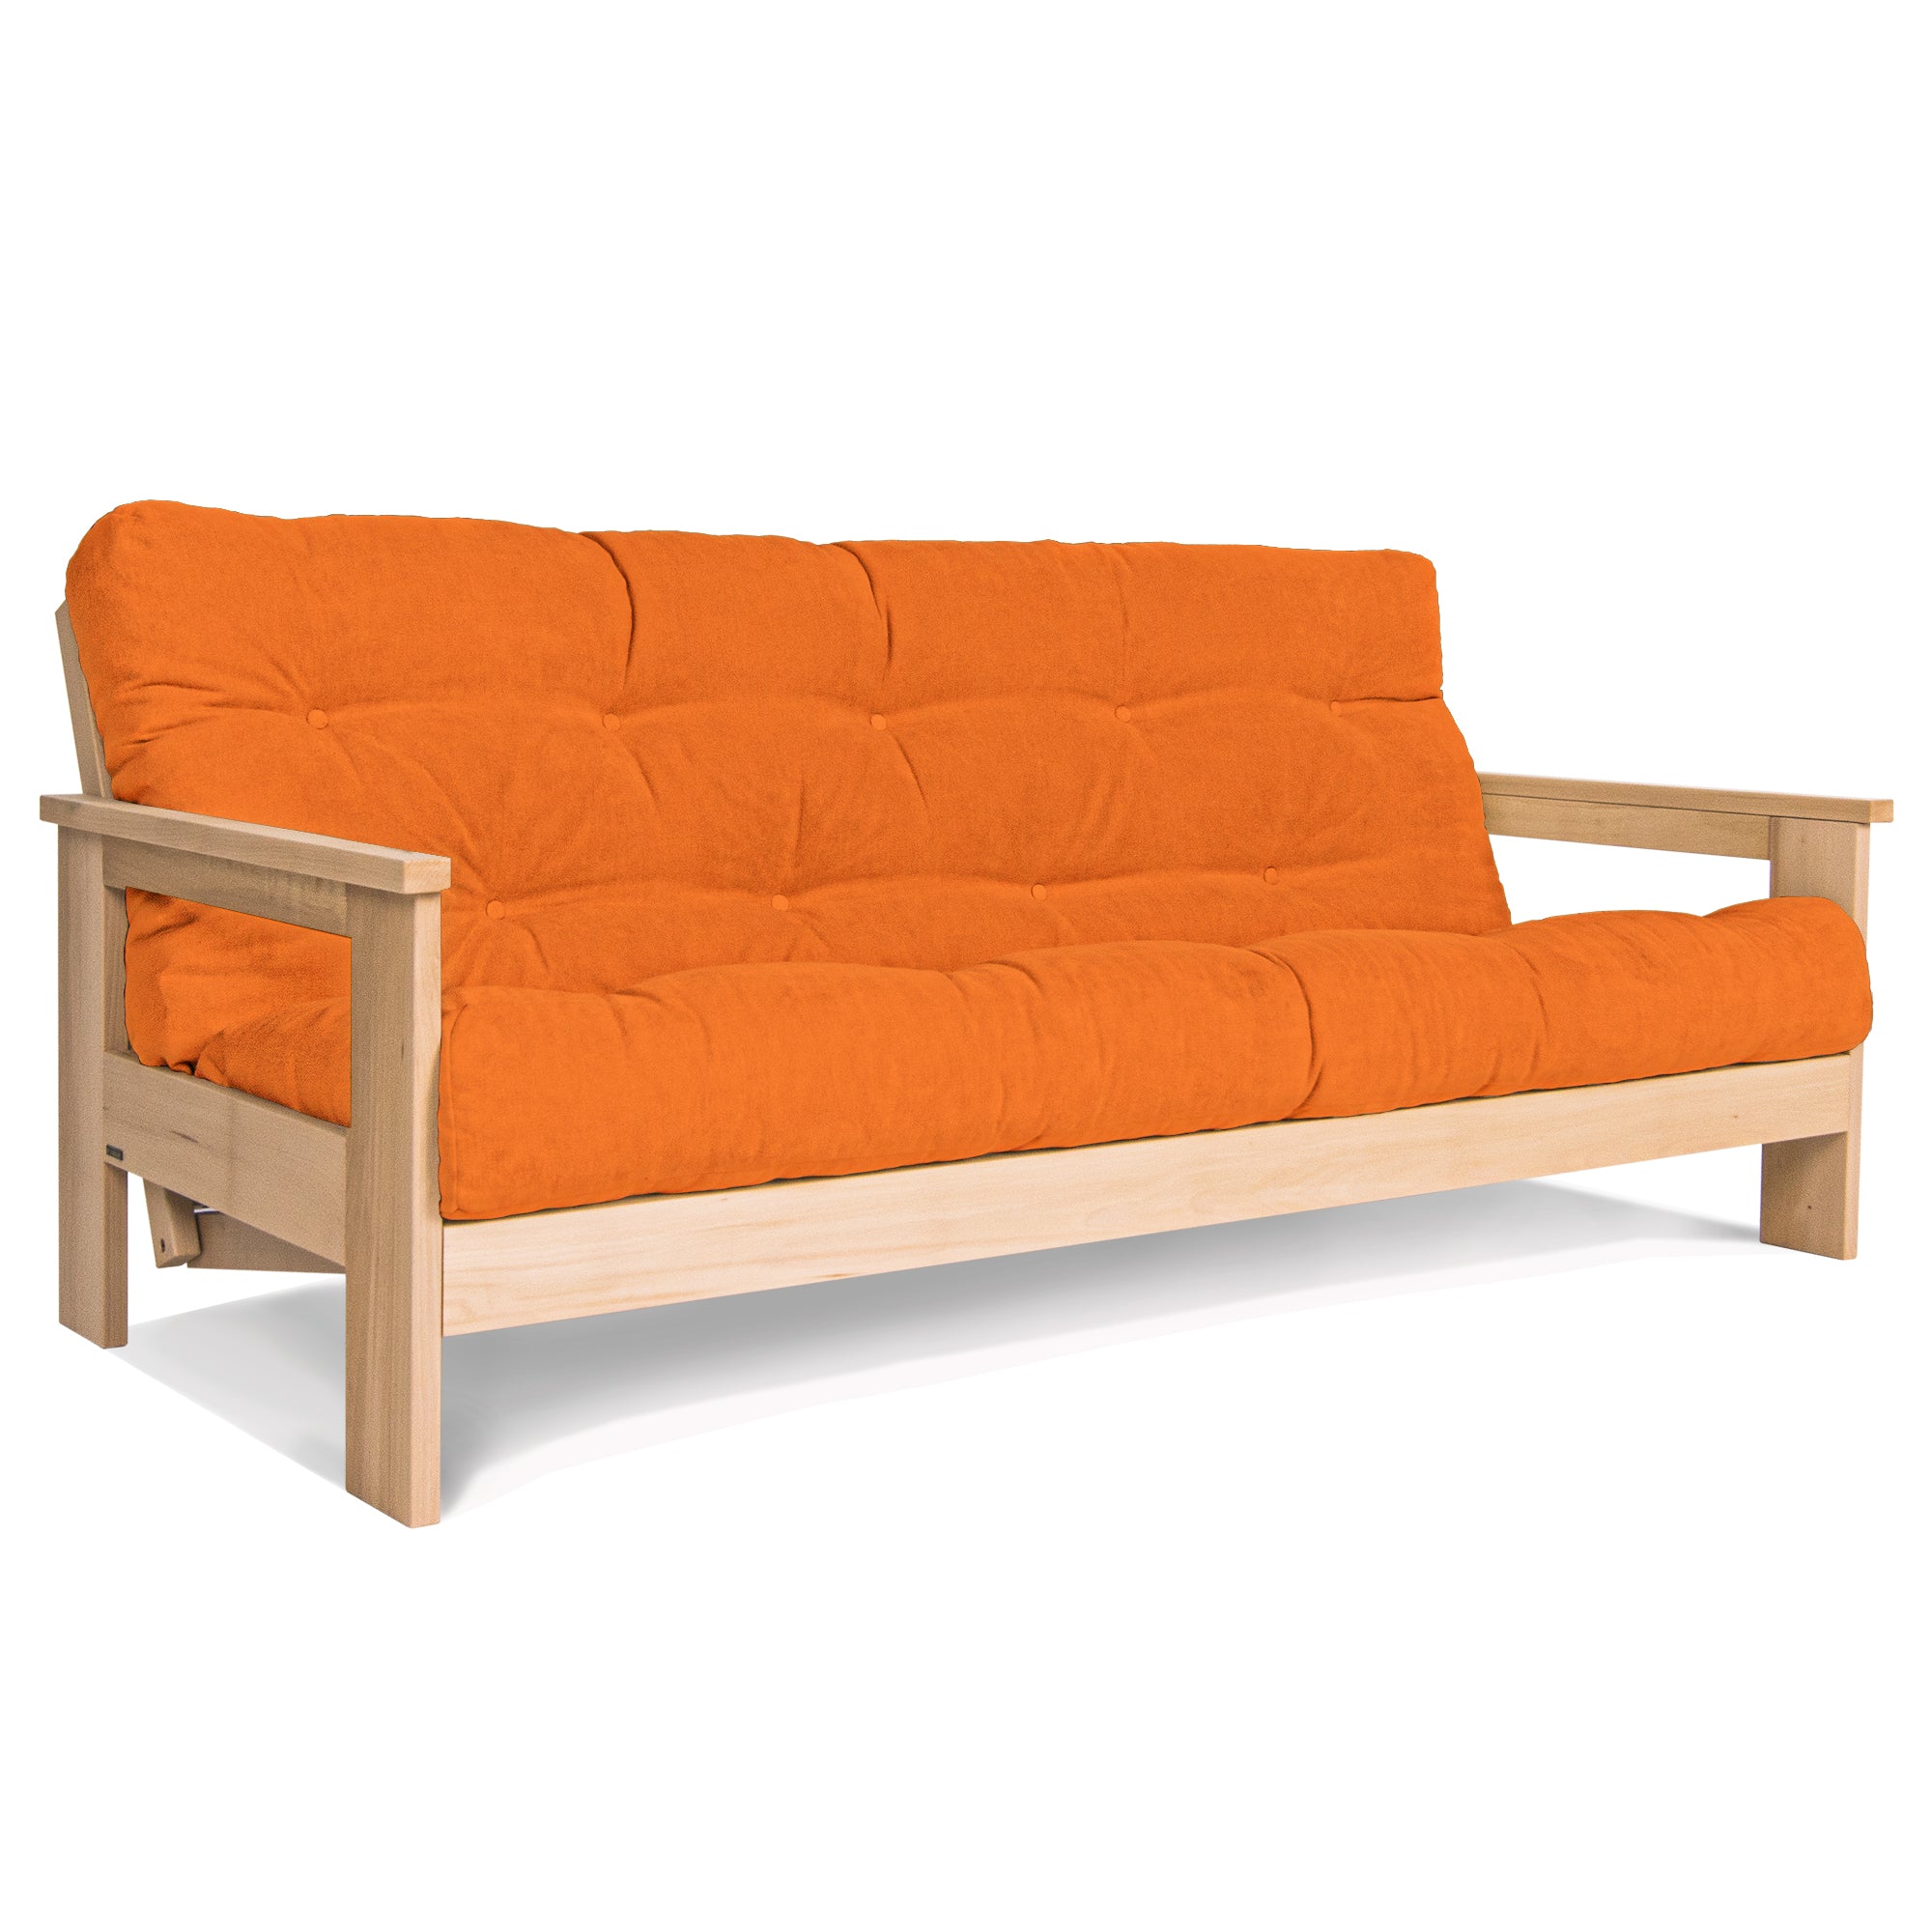 MEXICO Folding Sofa Bed-Beech Wood Frame-Natural Colour-orange fabric